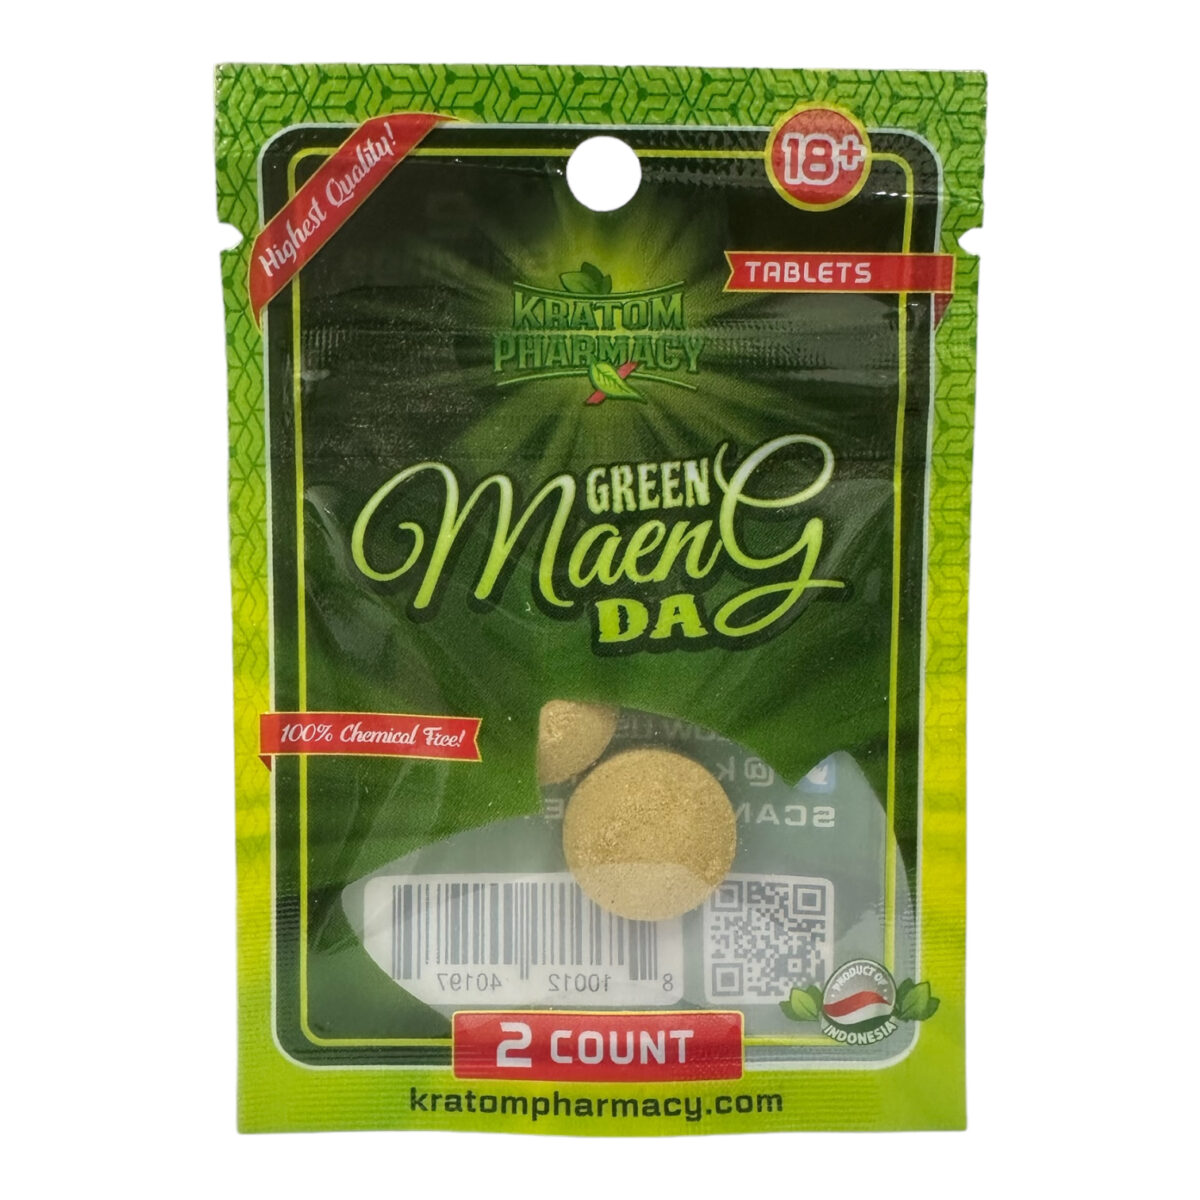 Kratom Pharmacy Green Maeng Da Tab – 2ct